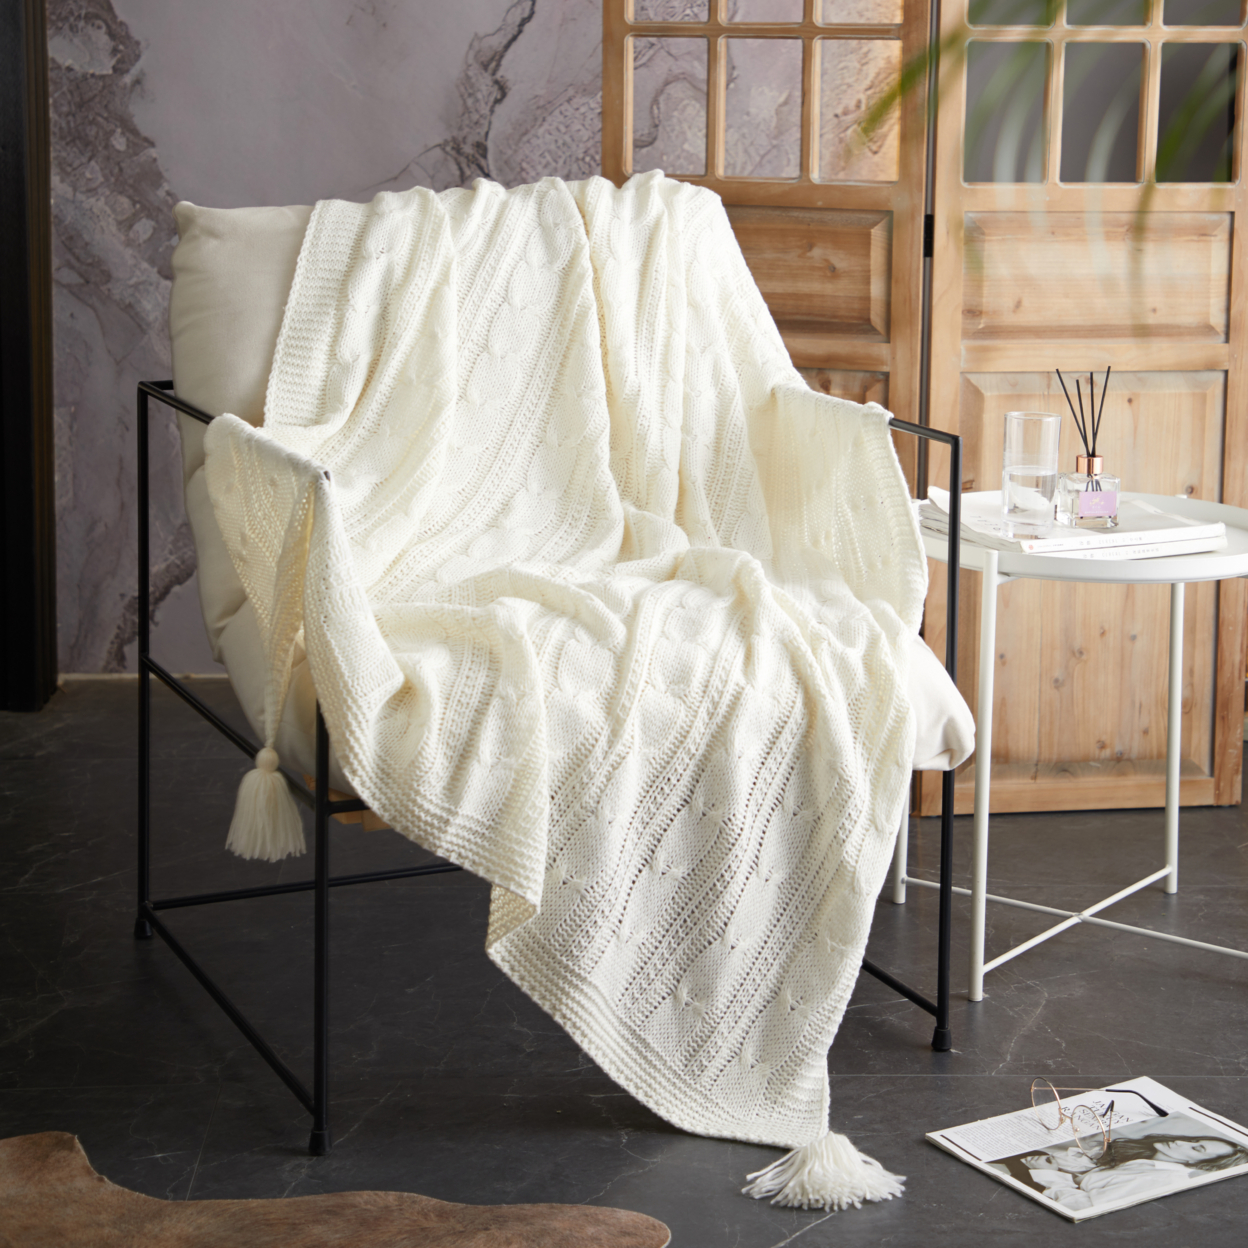 NY&C Home Dorja Knitted Throw Blanket Plush Super Soft Textured Pattern - Beige